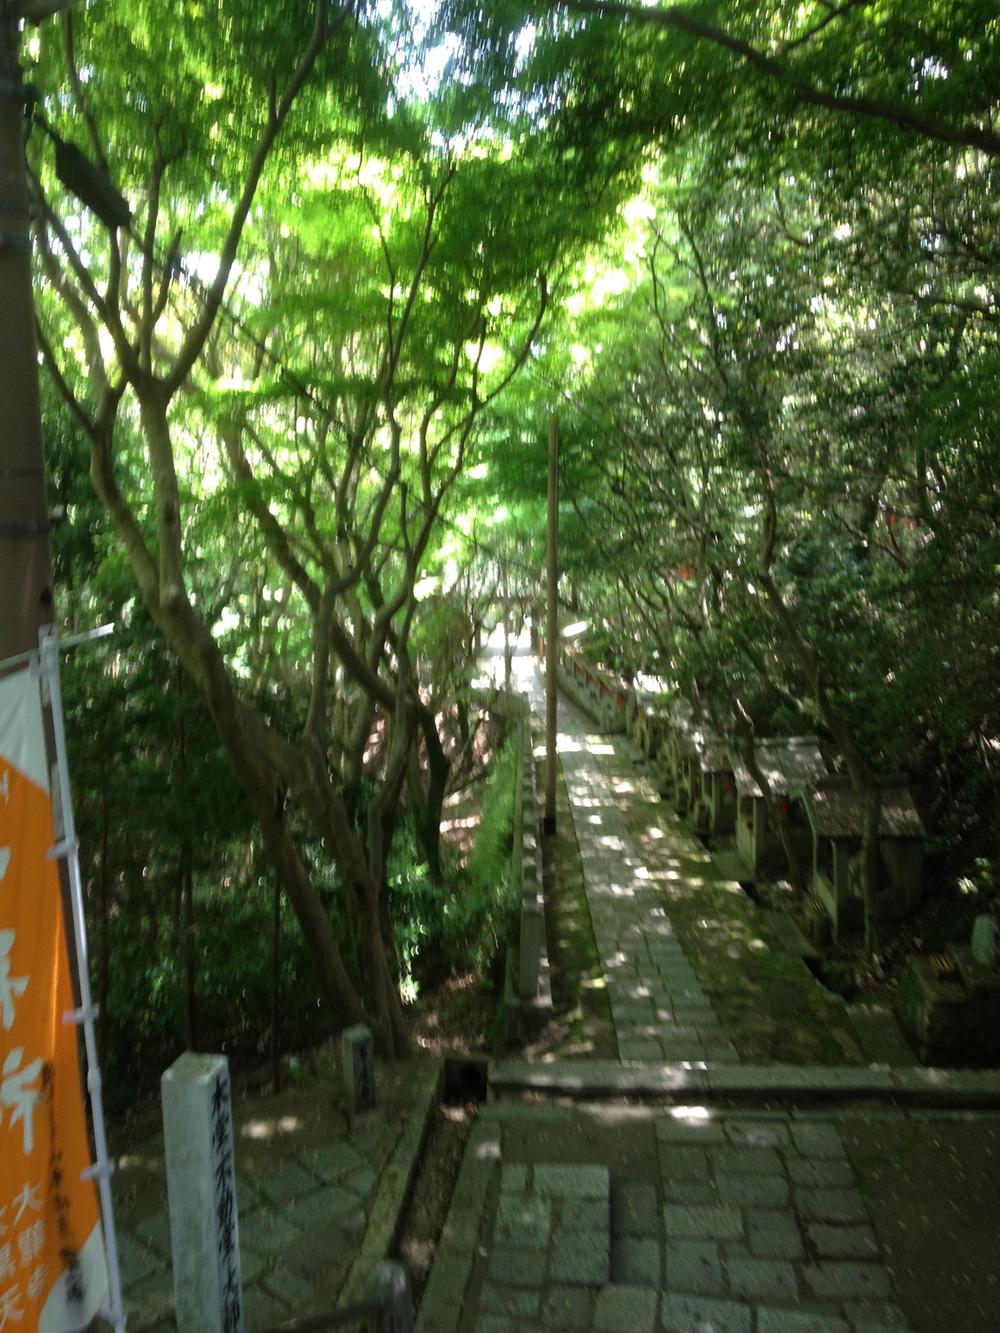 Local appearance photo. Shukugawa to Oasis Road 2-minute walk